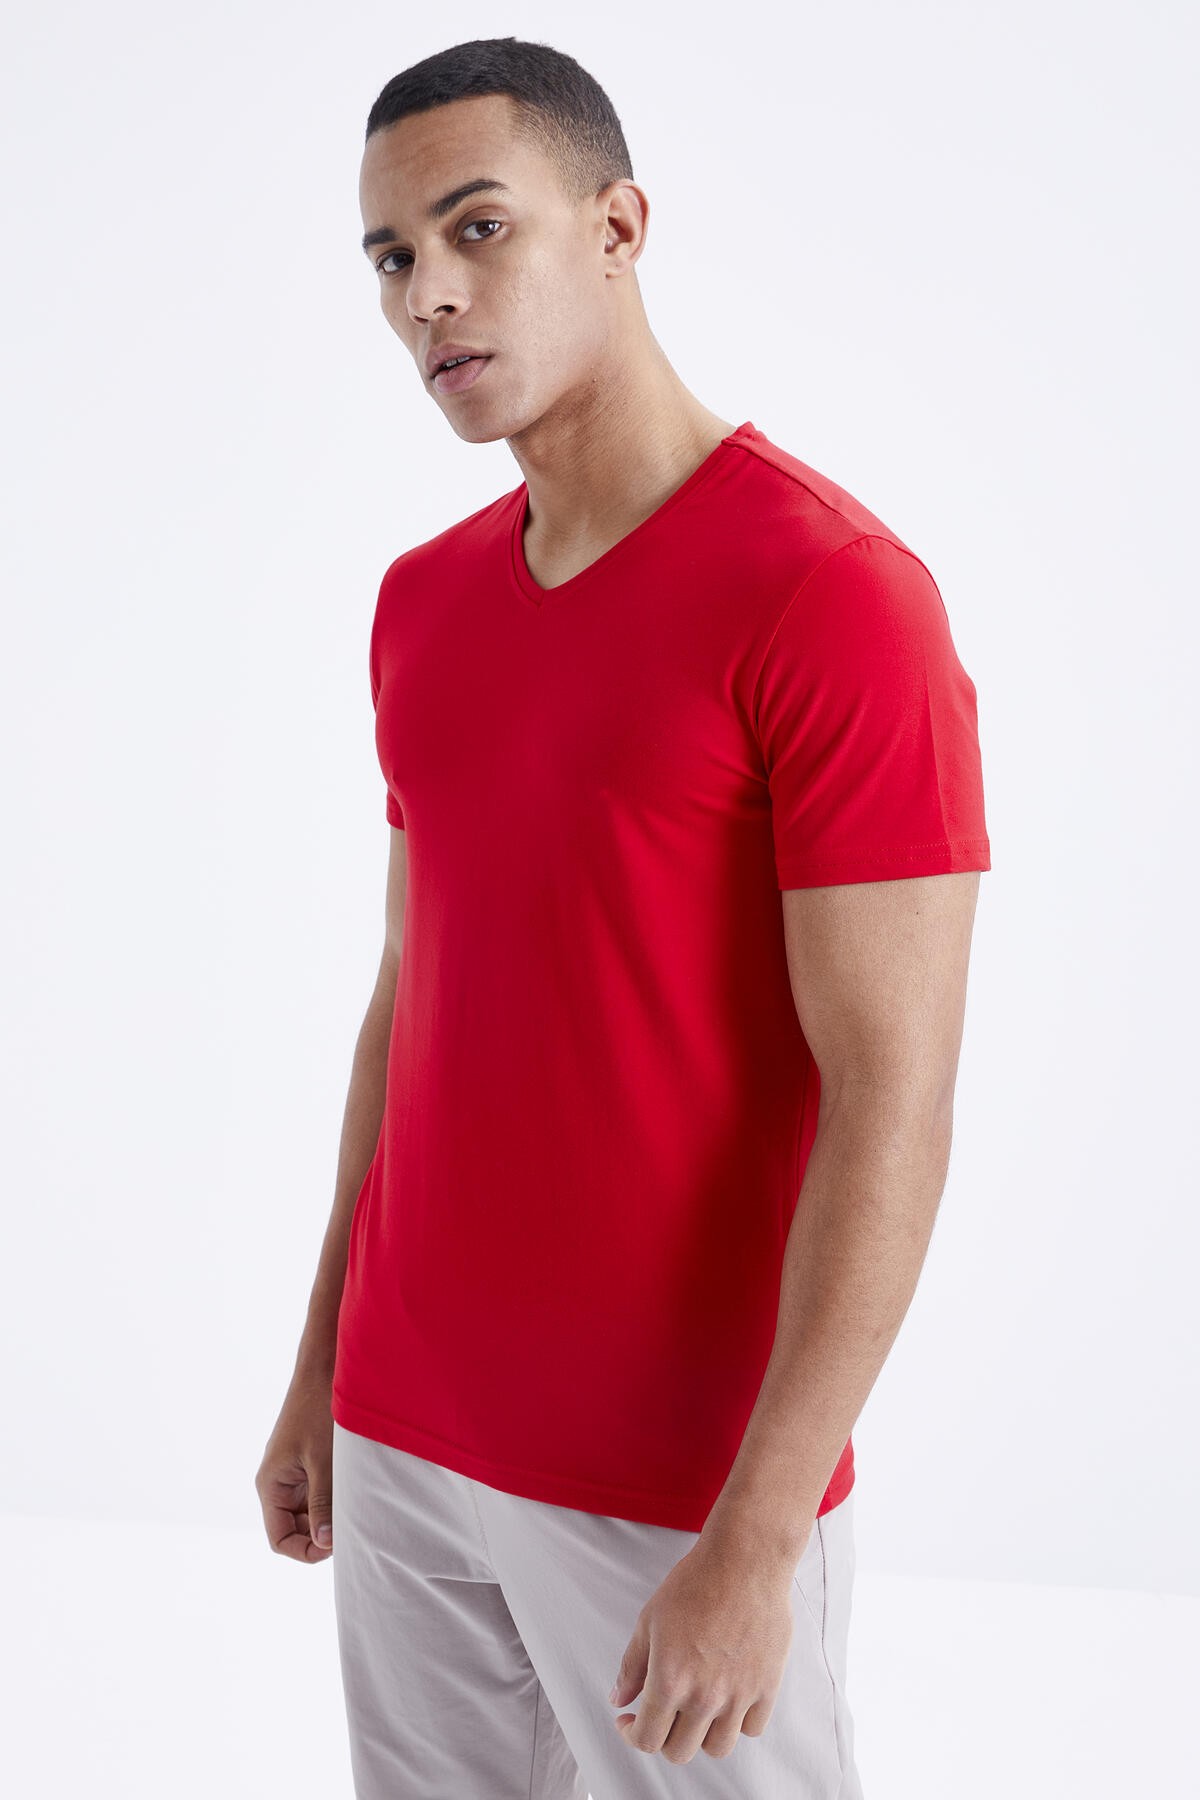 TommyLife - Kırmızı Basic Kısa Kol Standart Kalıp V Yaka Erkek T-Shirt - 87912